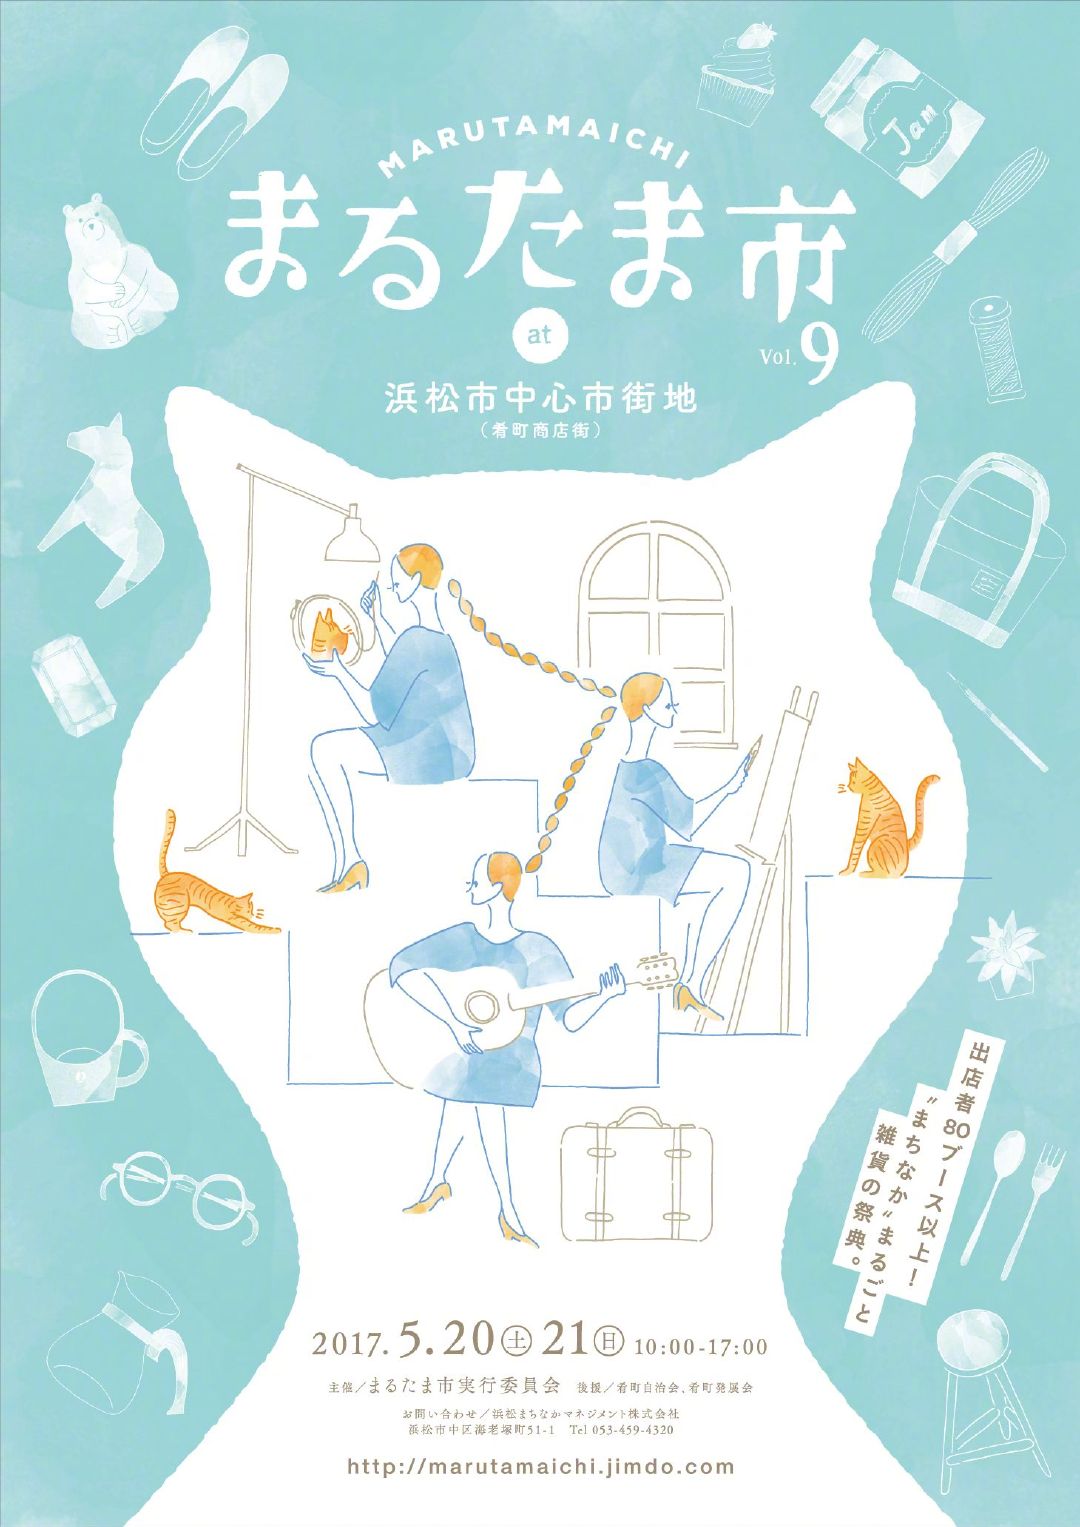 MARUTAMA ICHI日本插画风格海报设计